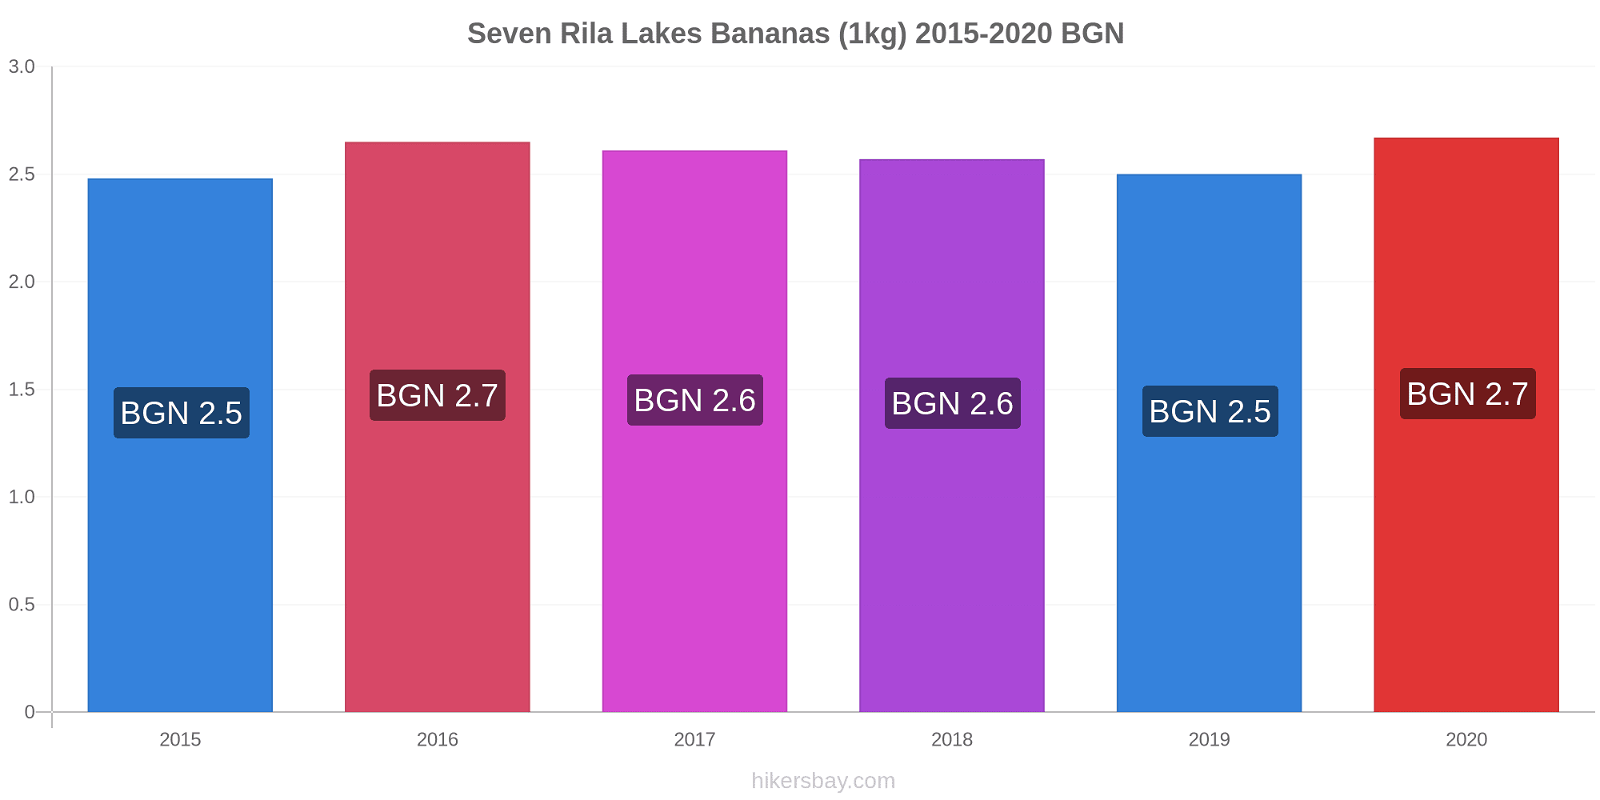 Seven Rila Lakes price changes Bananas (1kg) hikersbay.com